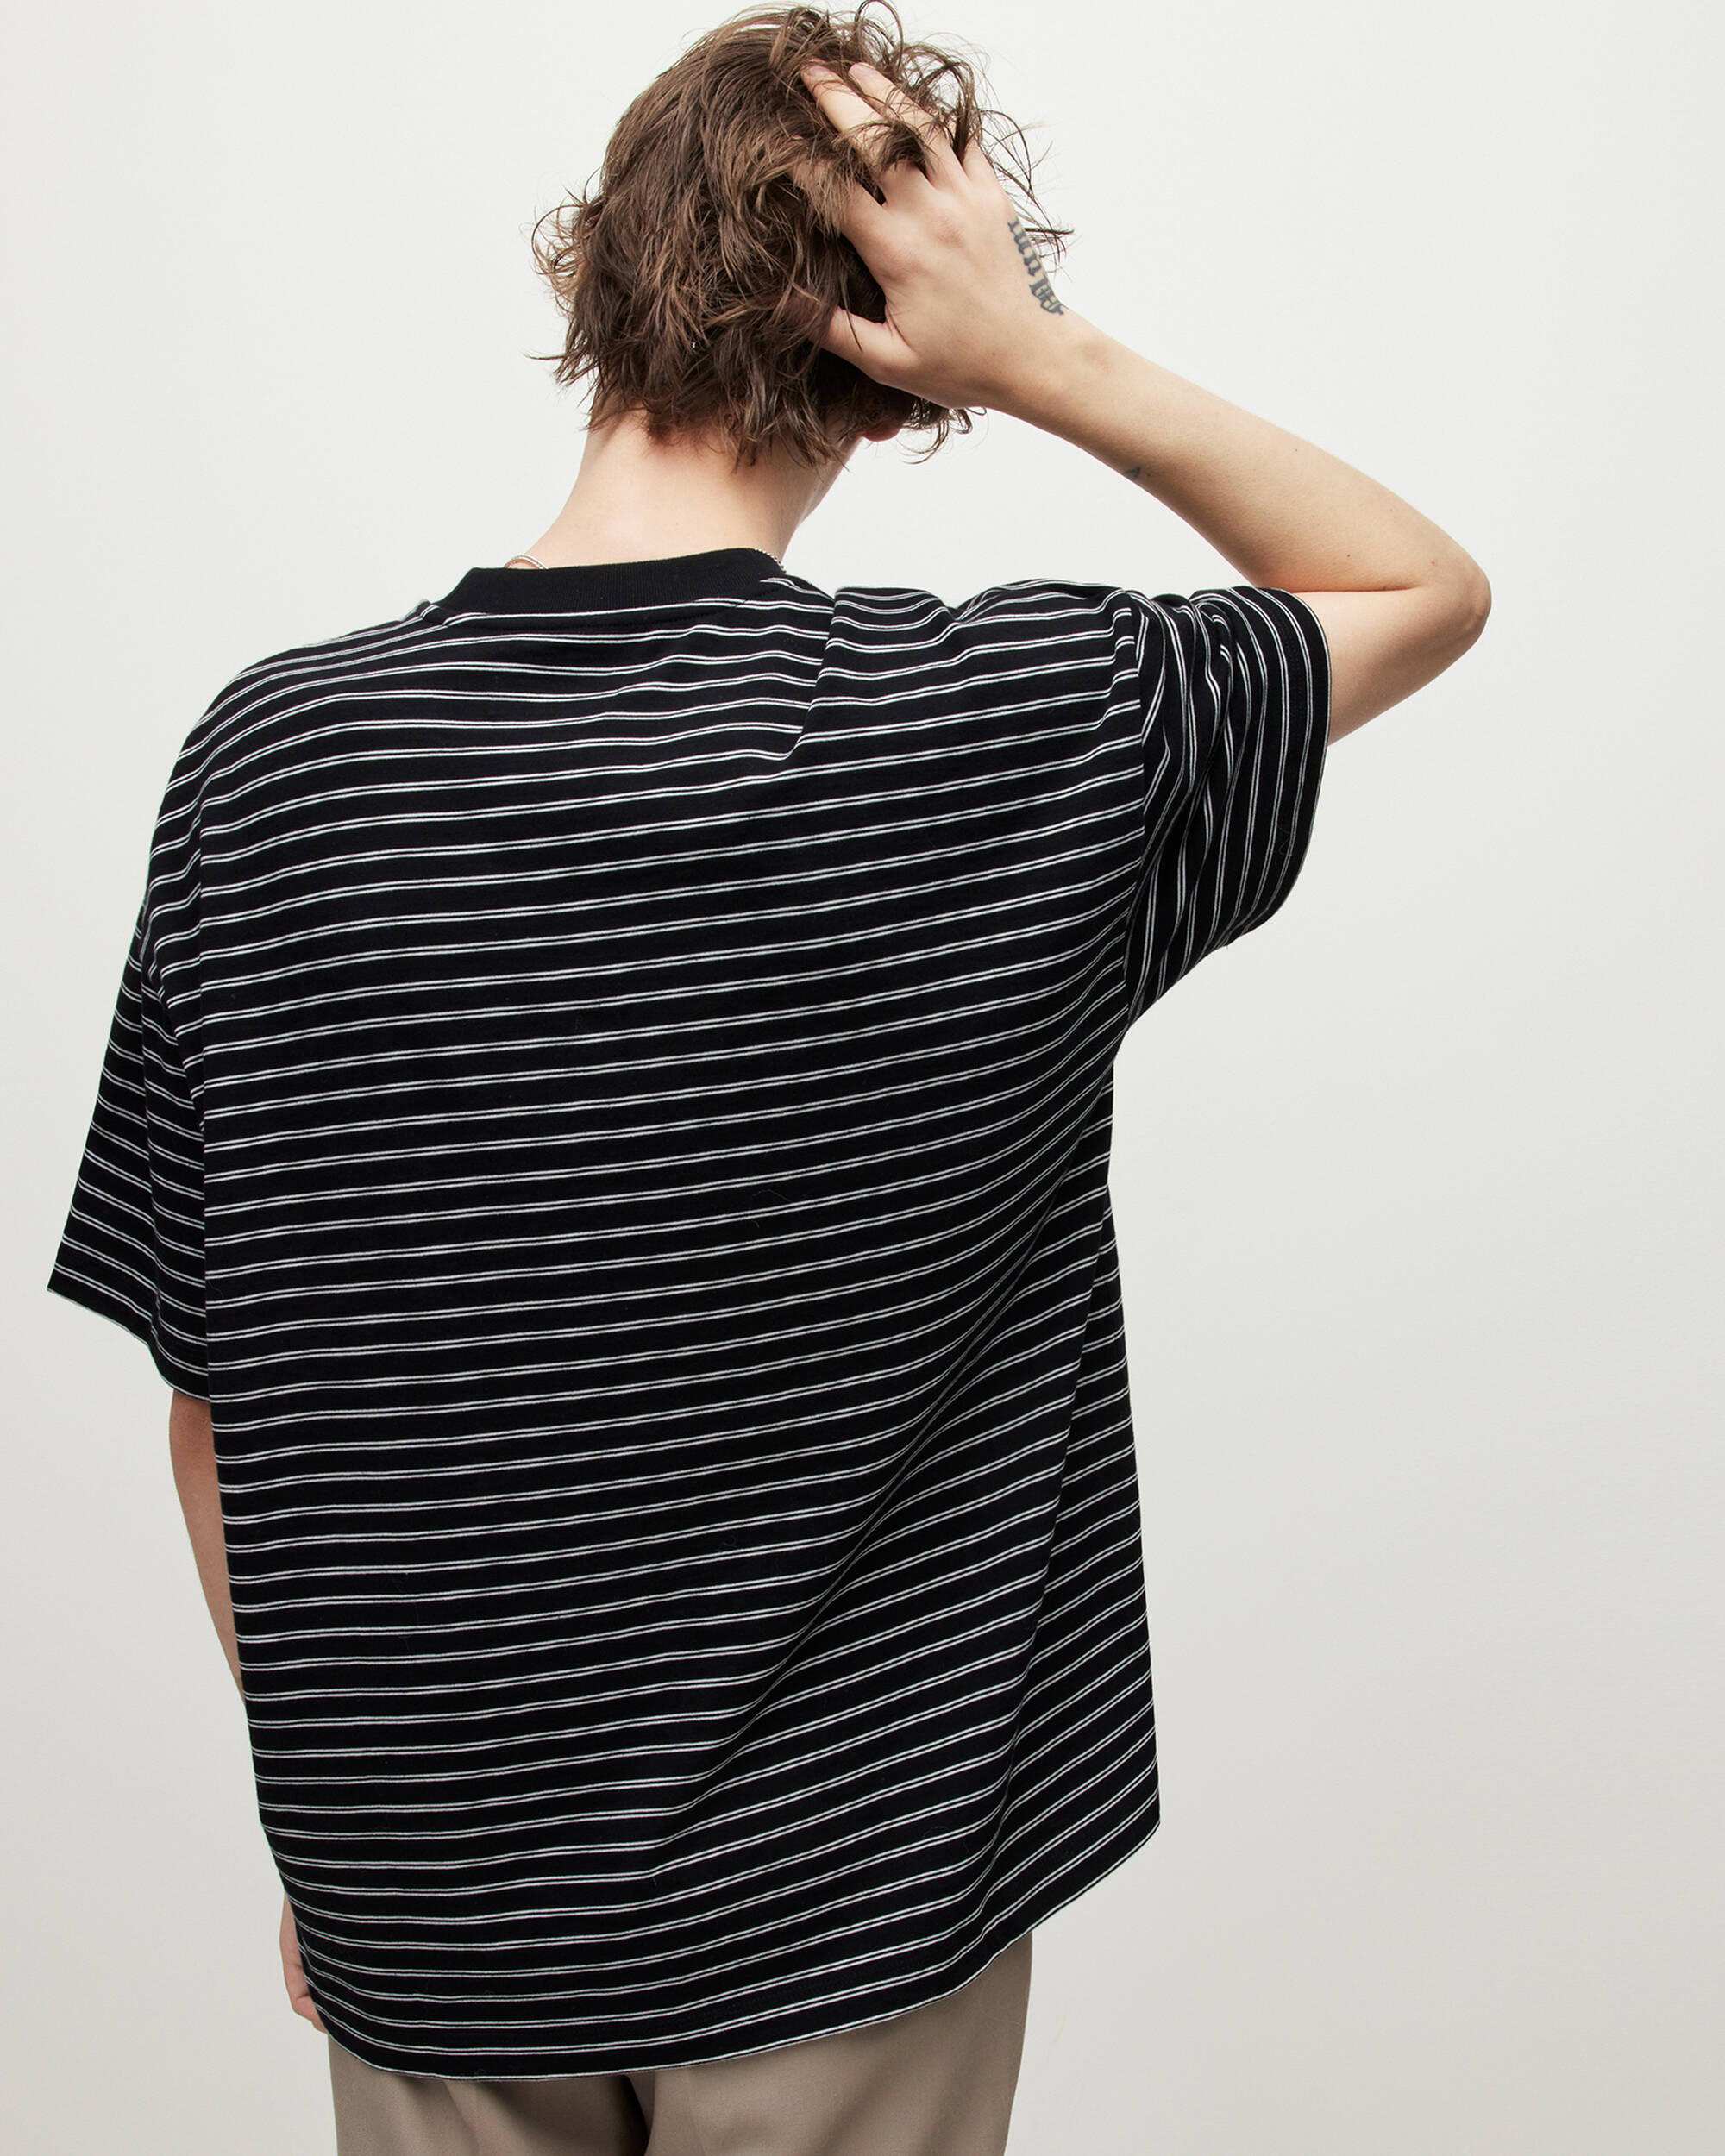 Stripe Subverse Oversized T-Shirt  large image number 4